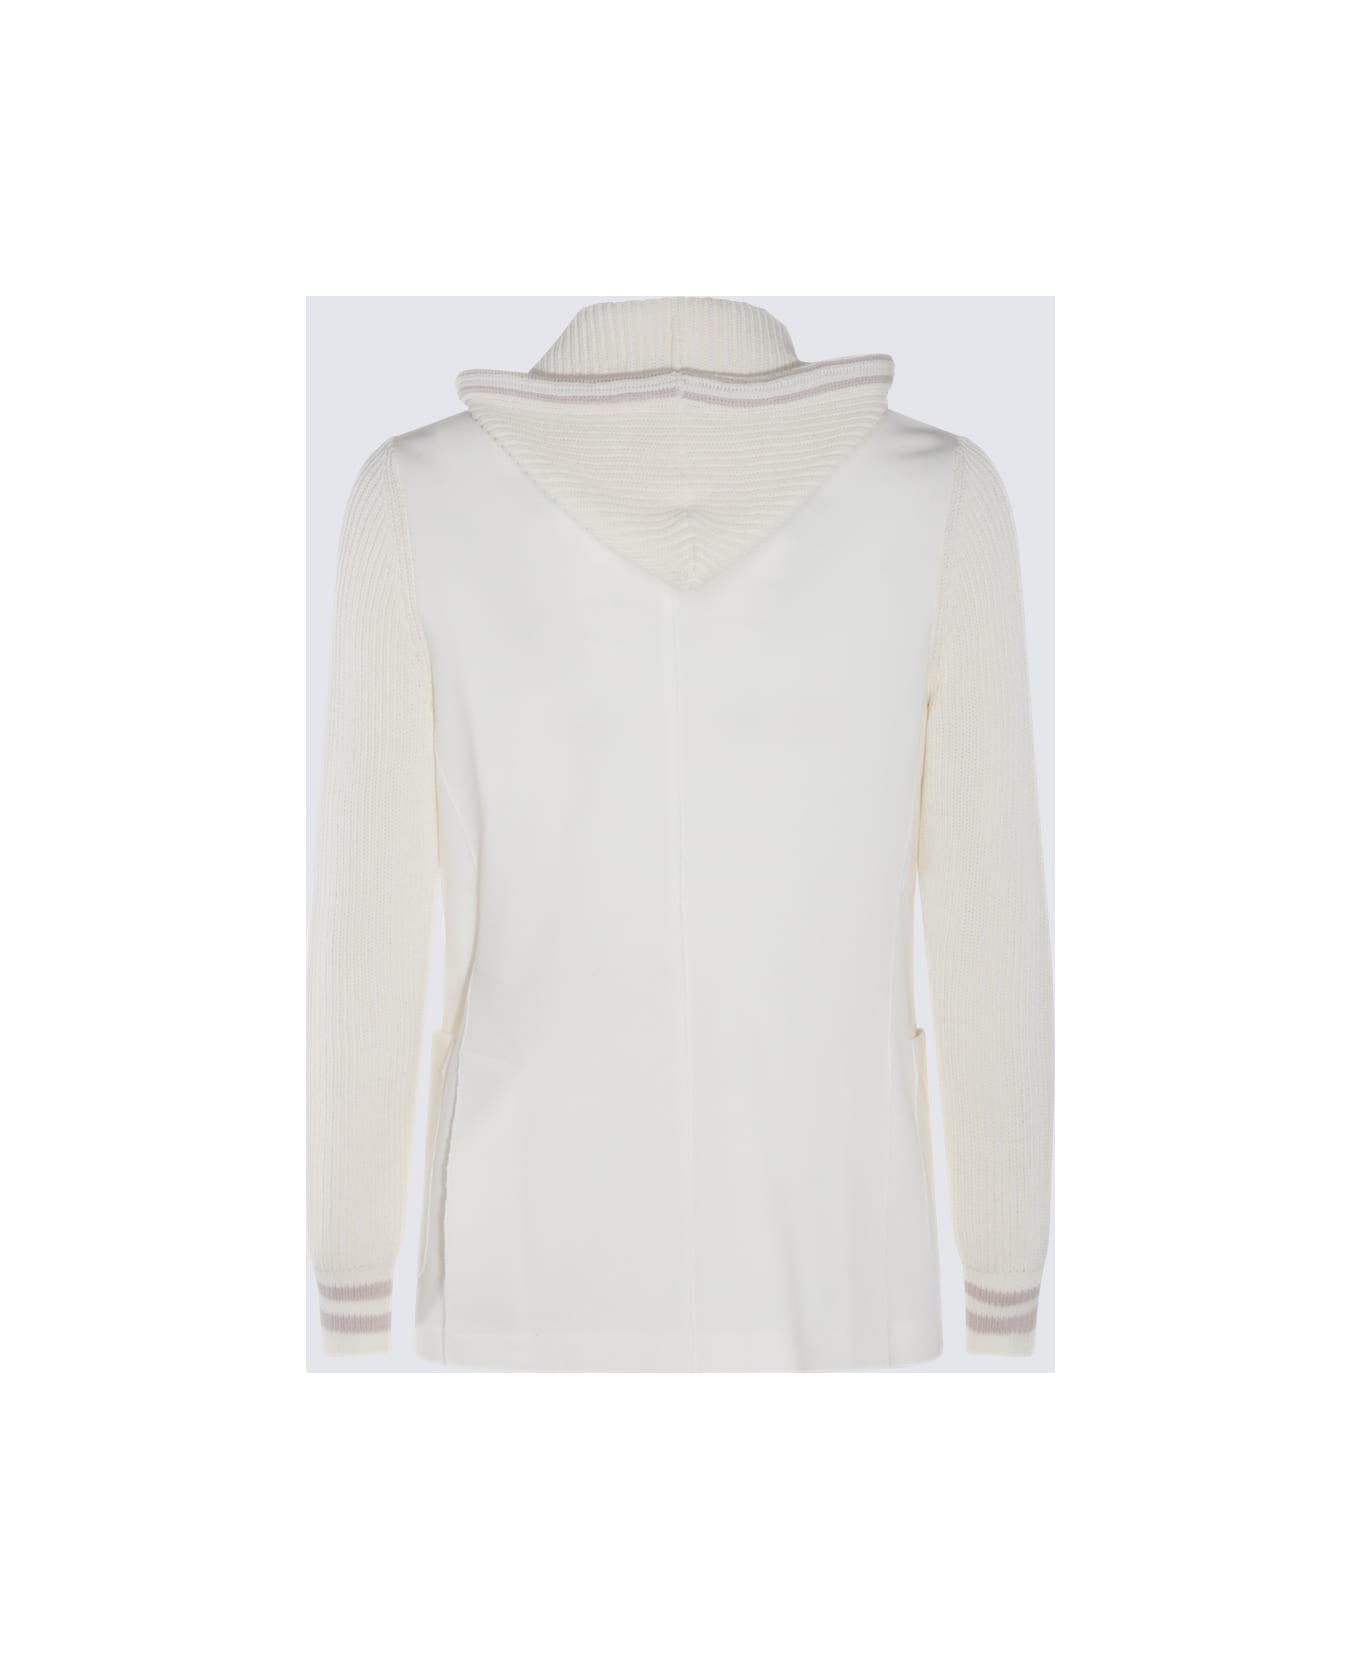 Eleventy White Cotton Casual Jacket